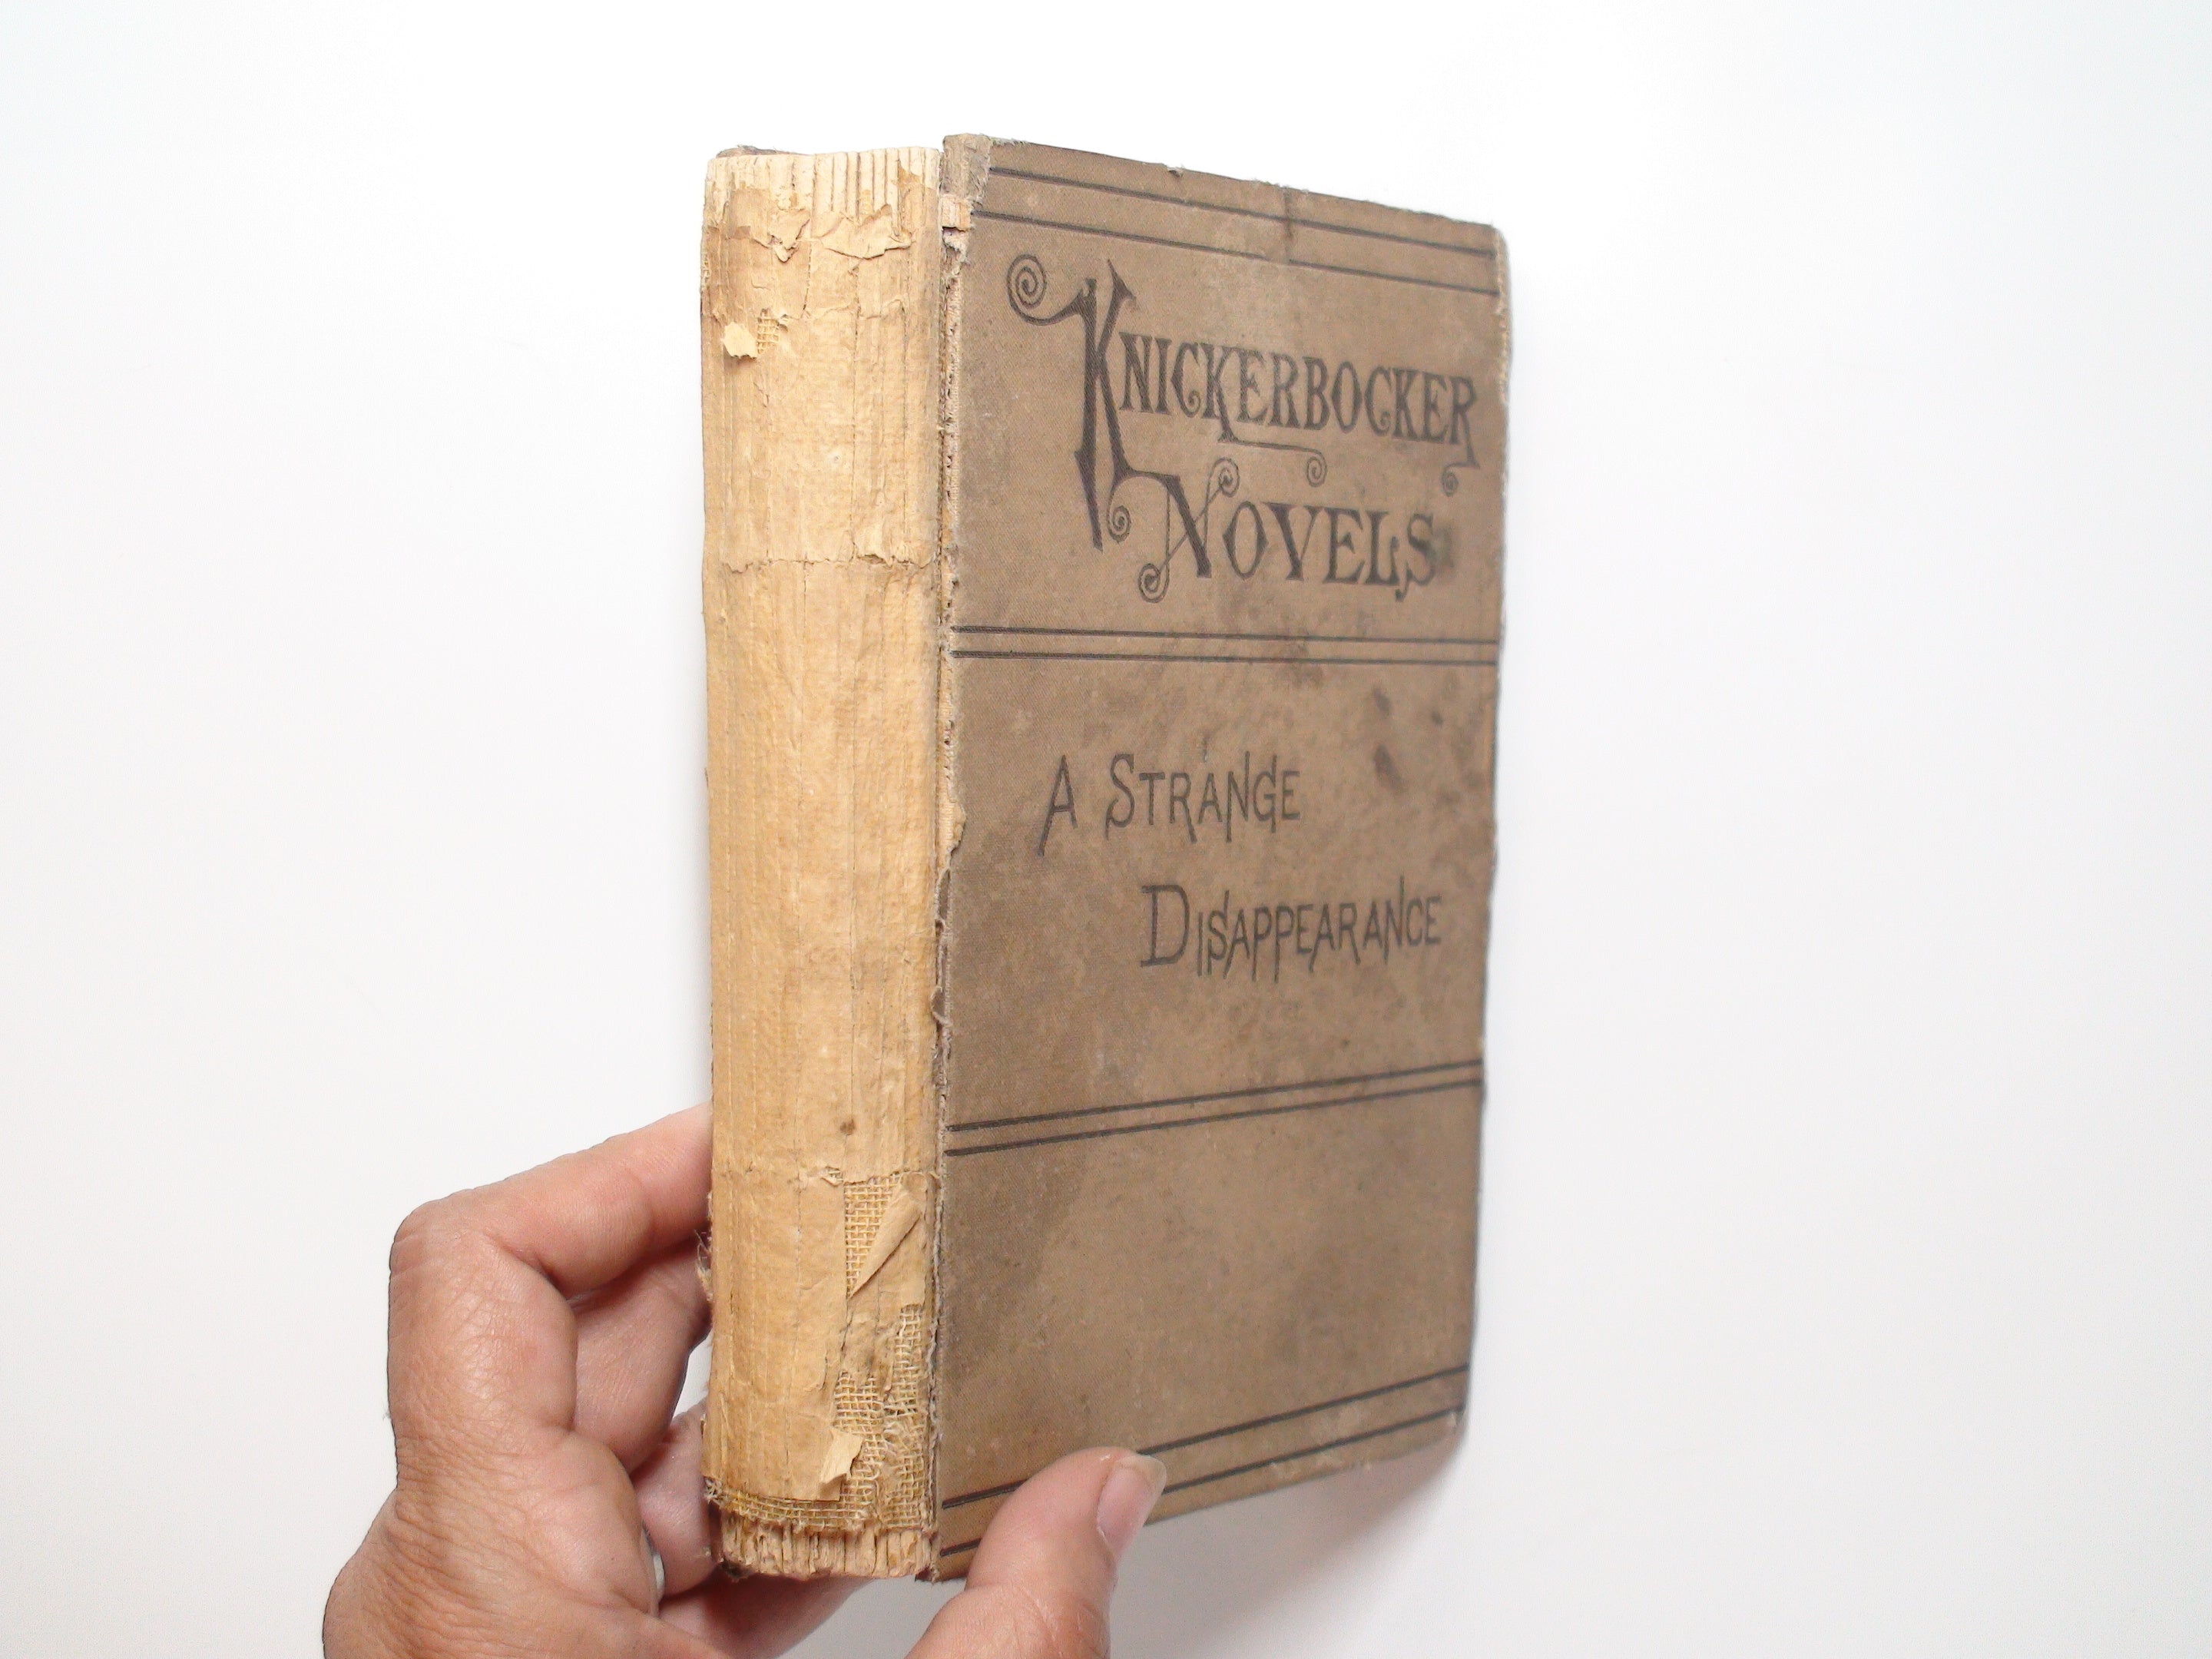 A Strange Disappearance, by Anna Katharine Green, Knickerbocker Novels, 1880